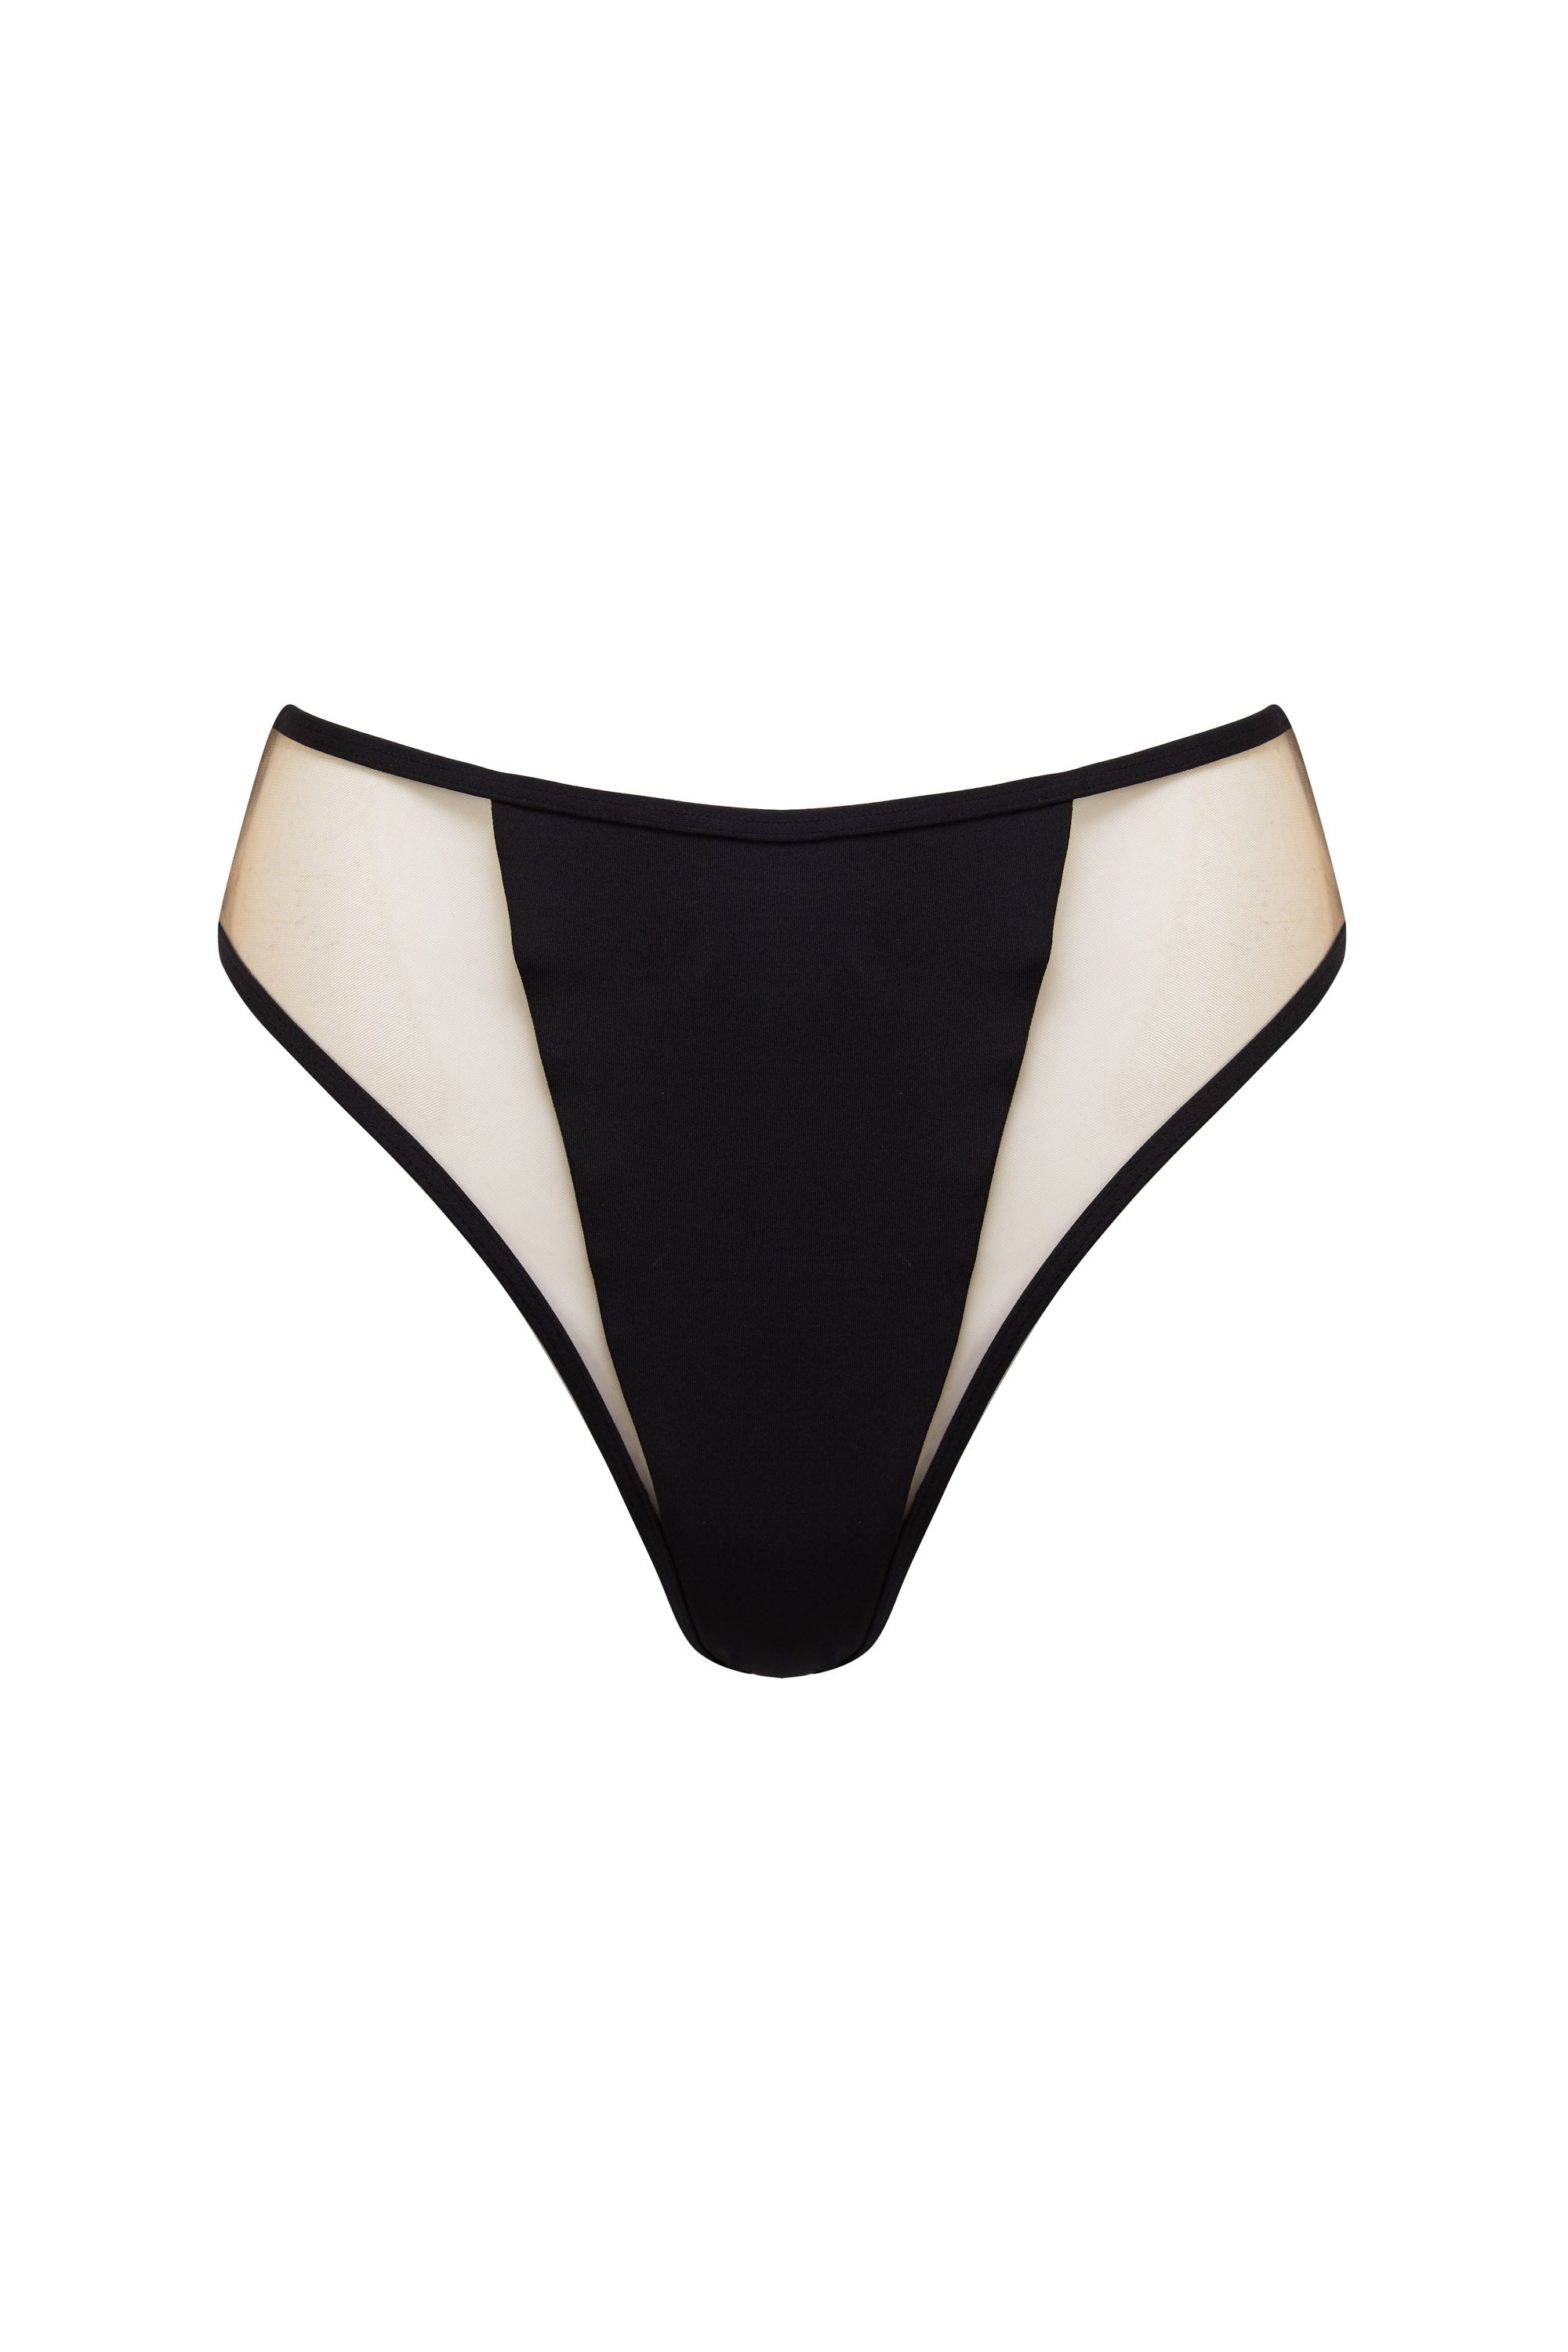 High-waist and high-leg black bikini bottoms with nude mesh inserts